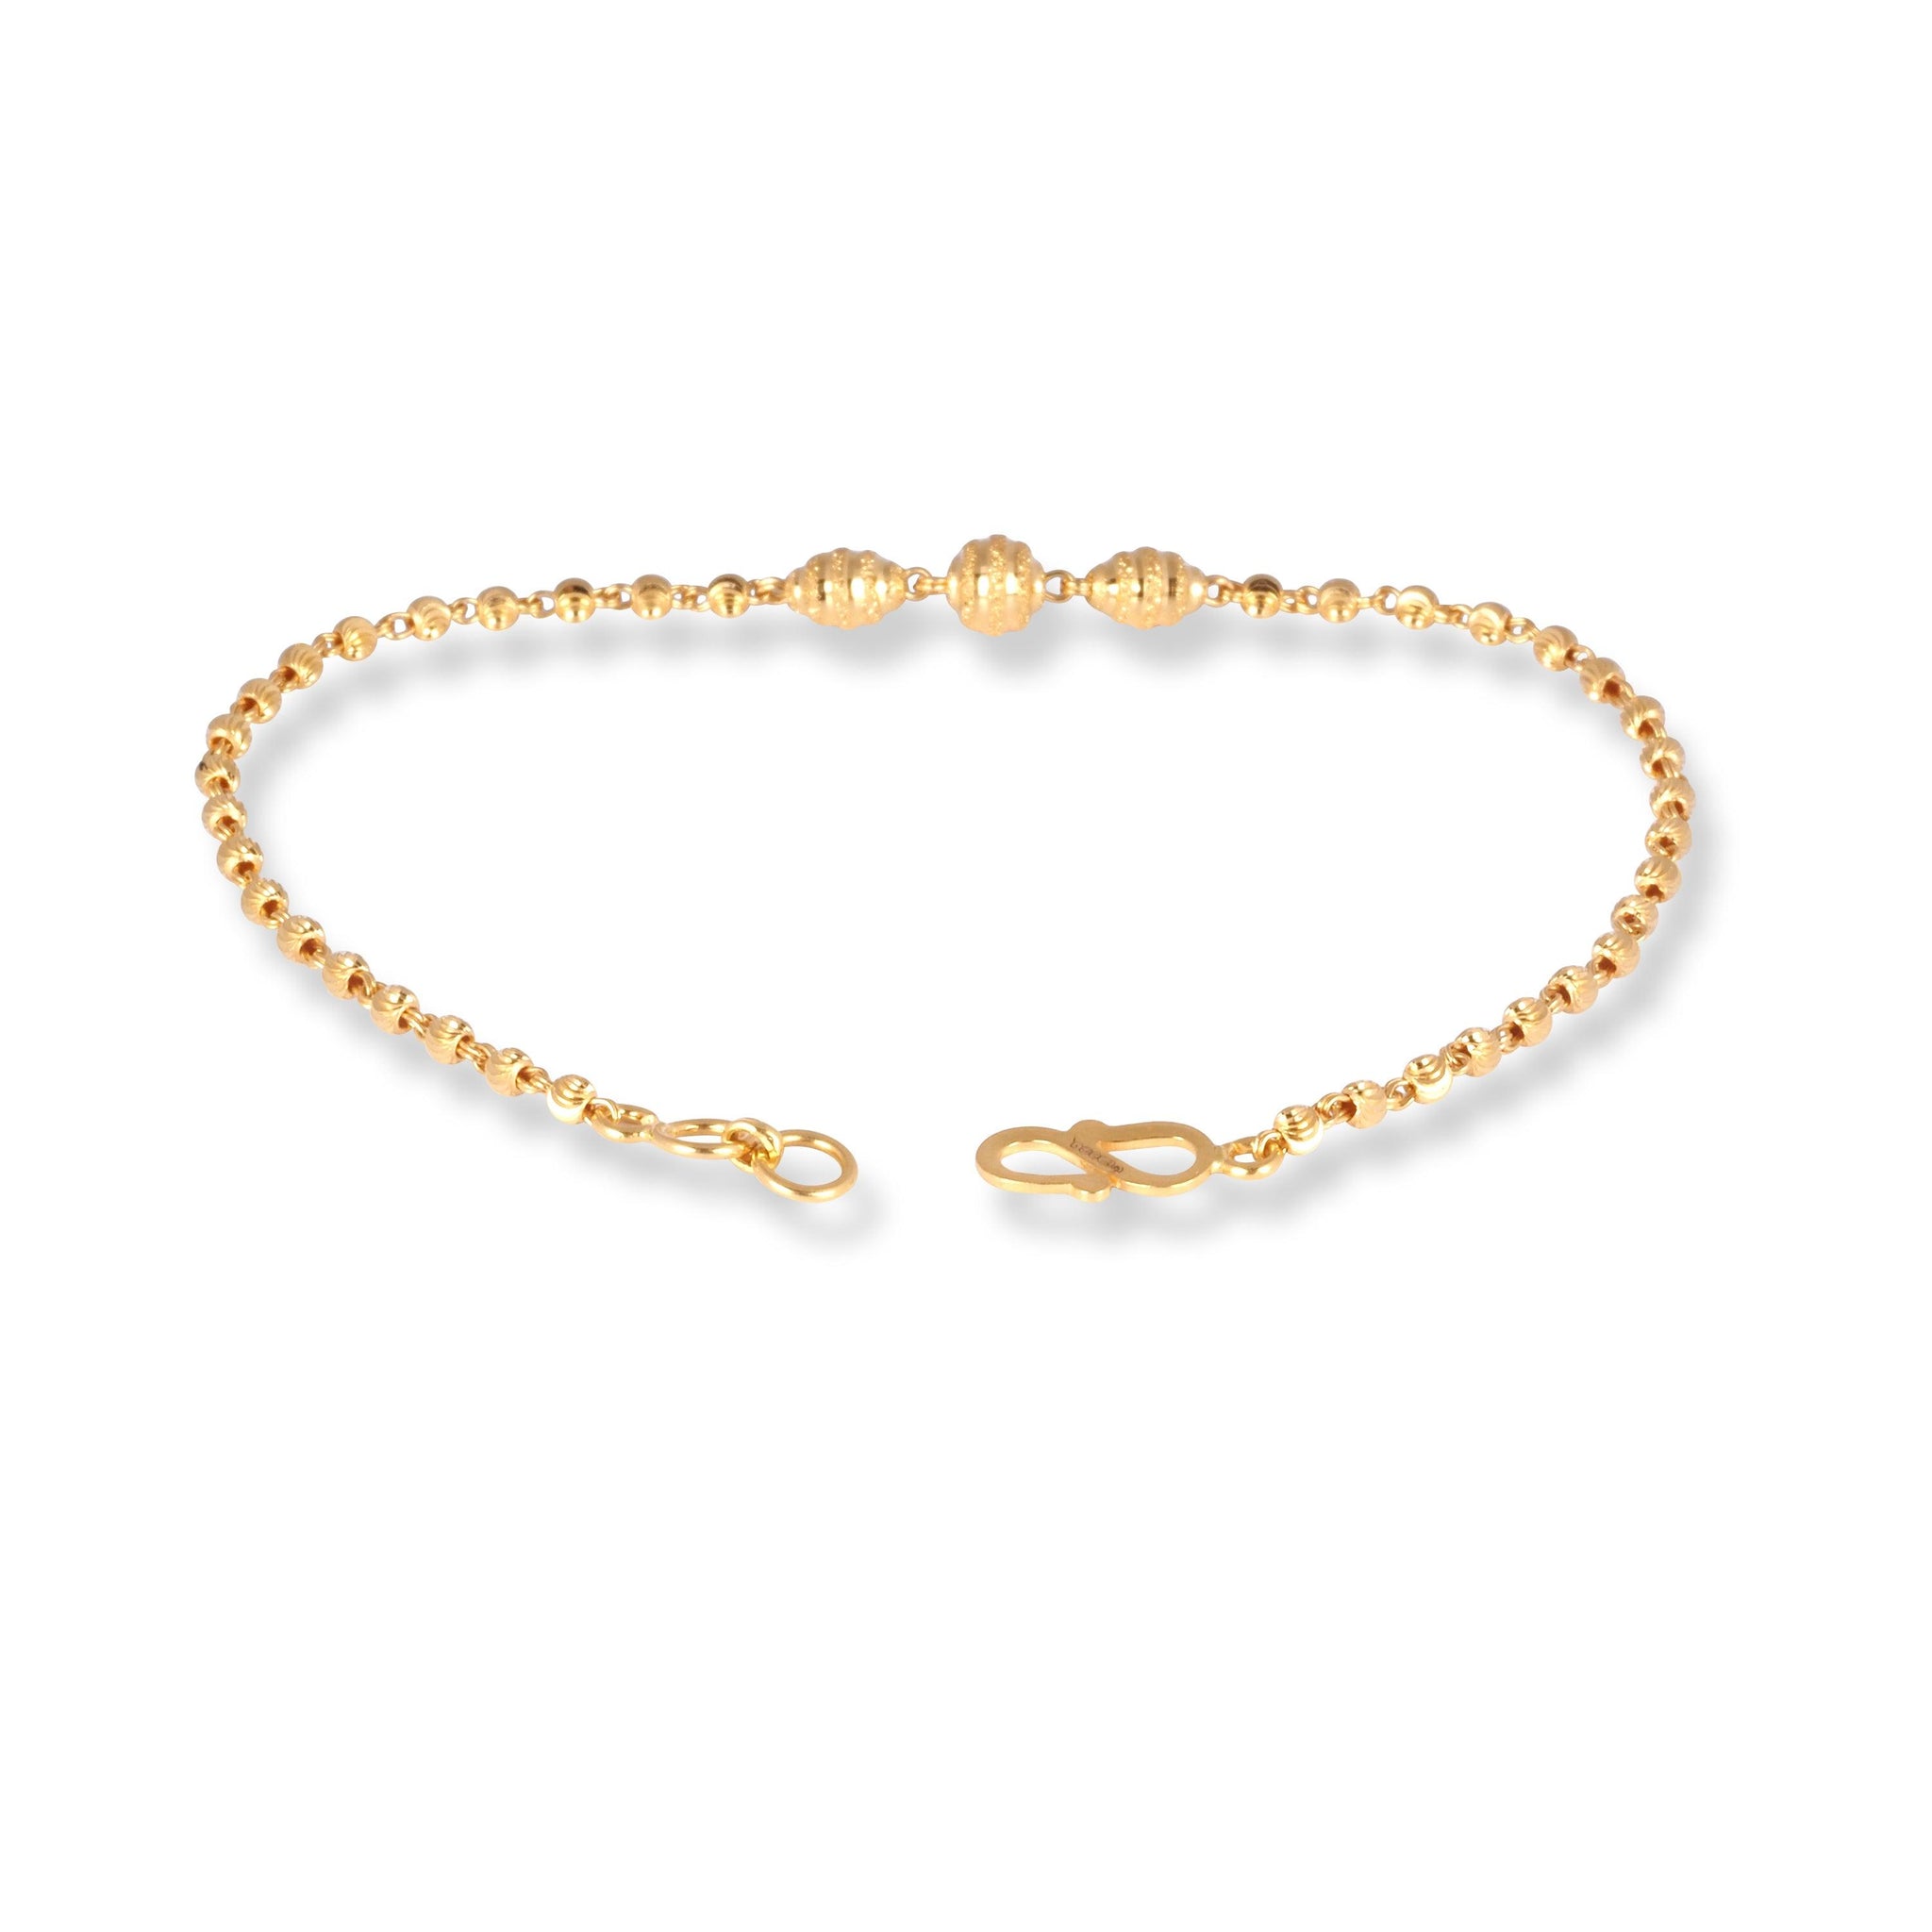 22ct Gold Ladies Beaded Bracelet with ''S'' Clasp LBR-7150